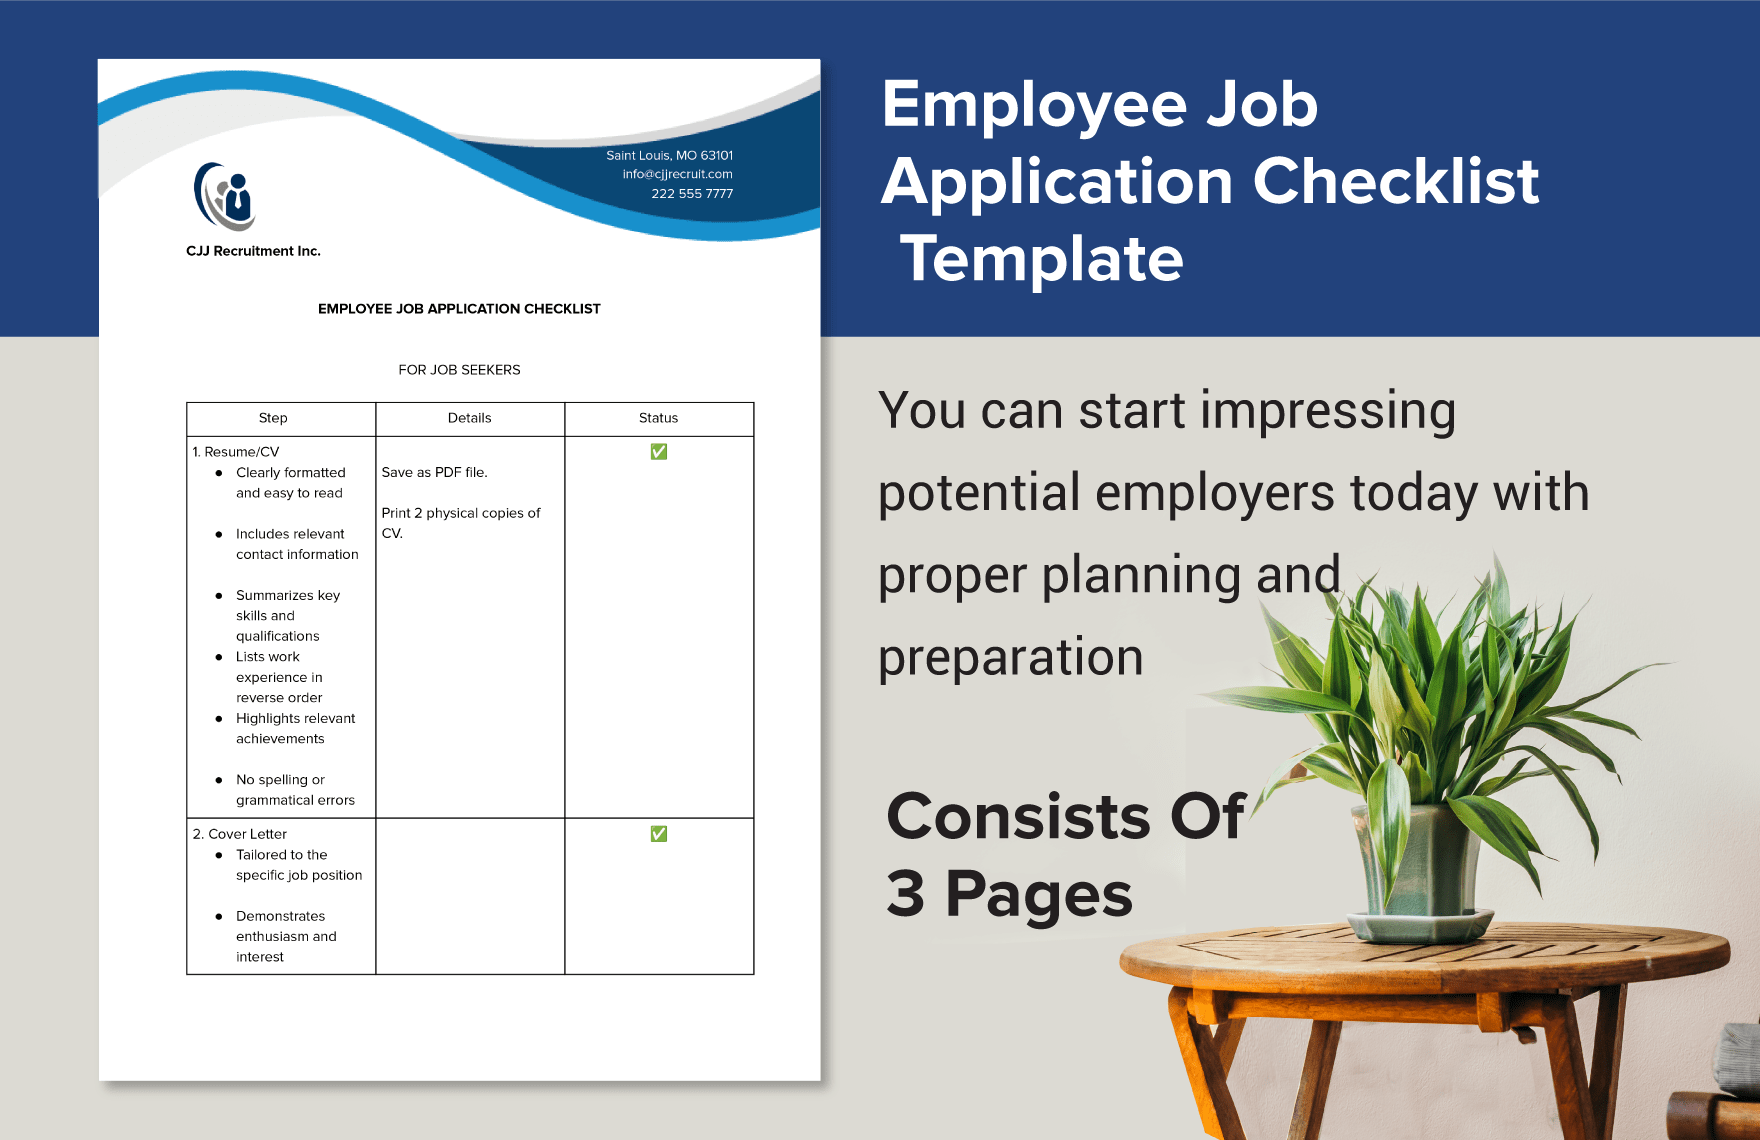 Employee Job Application Checklist Template